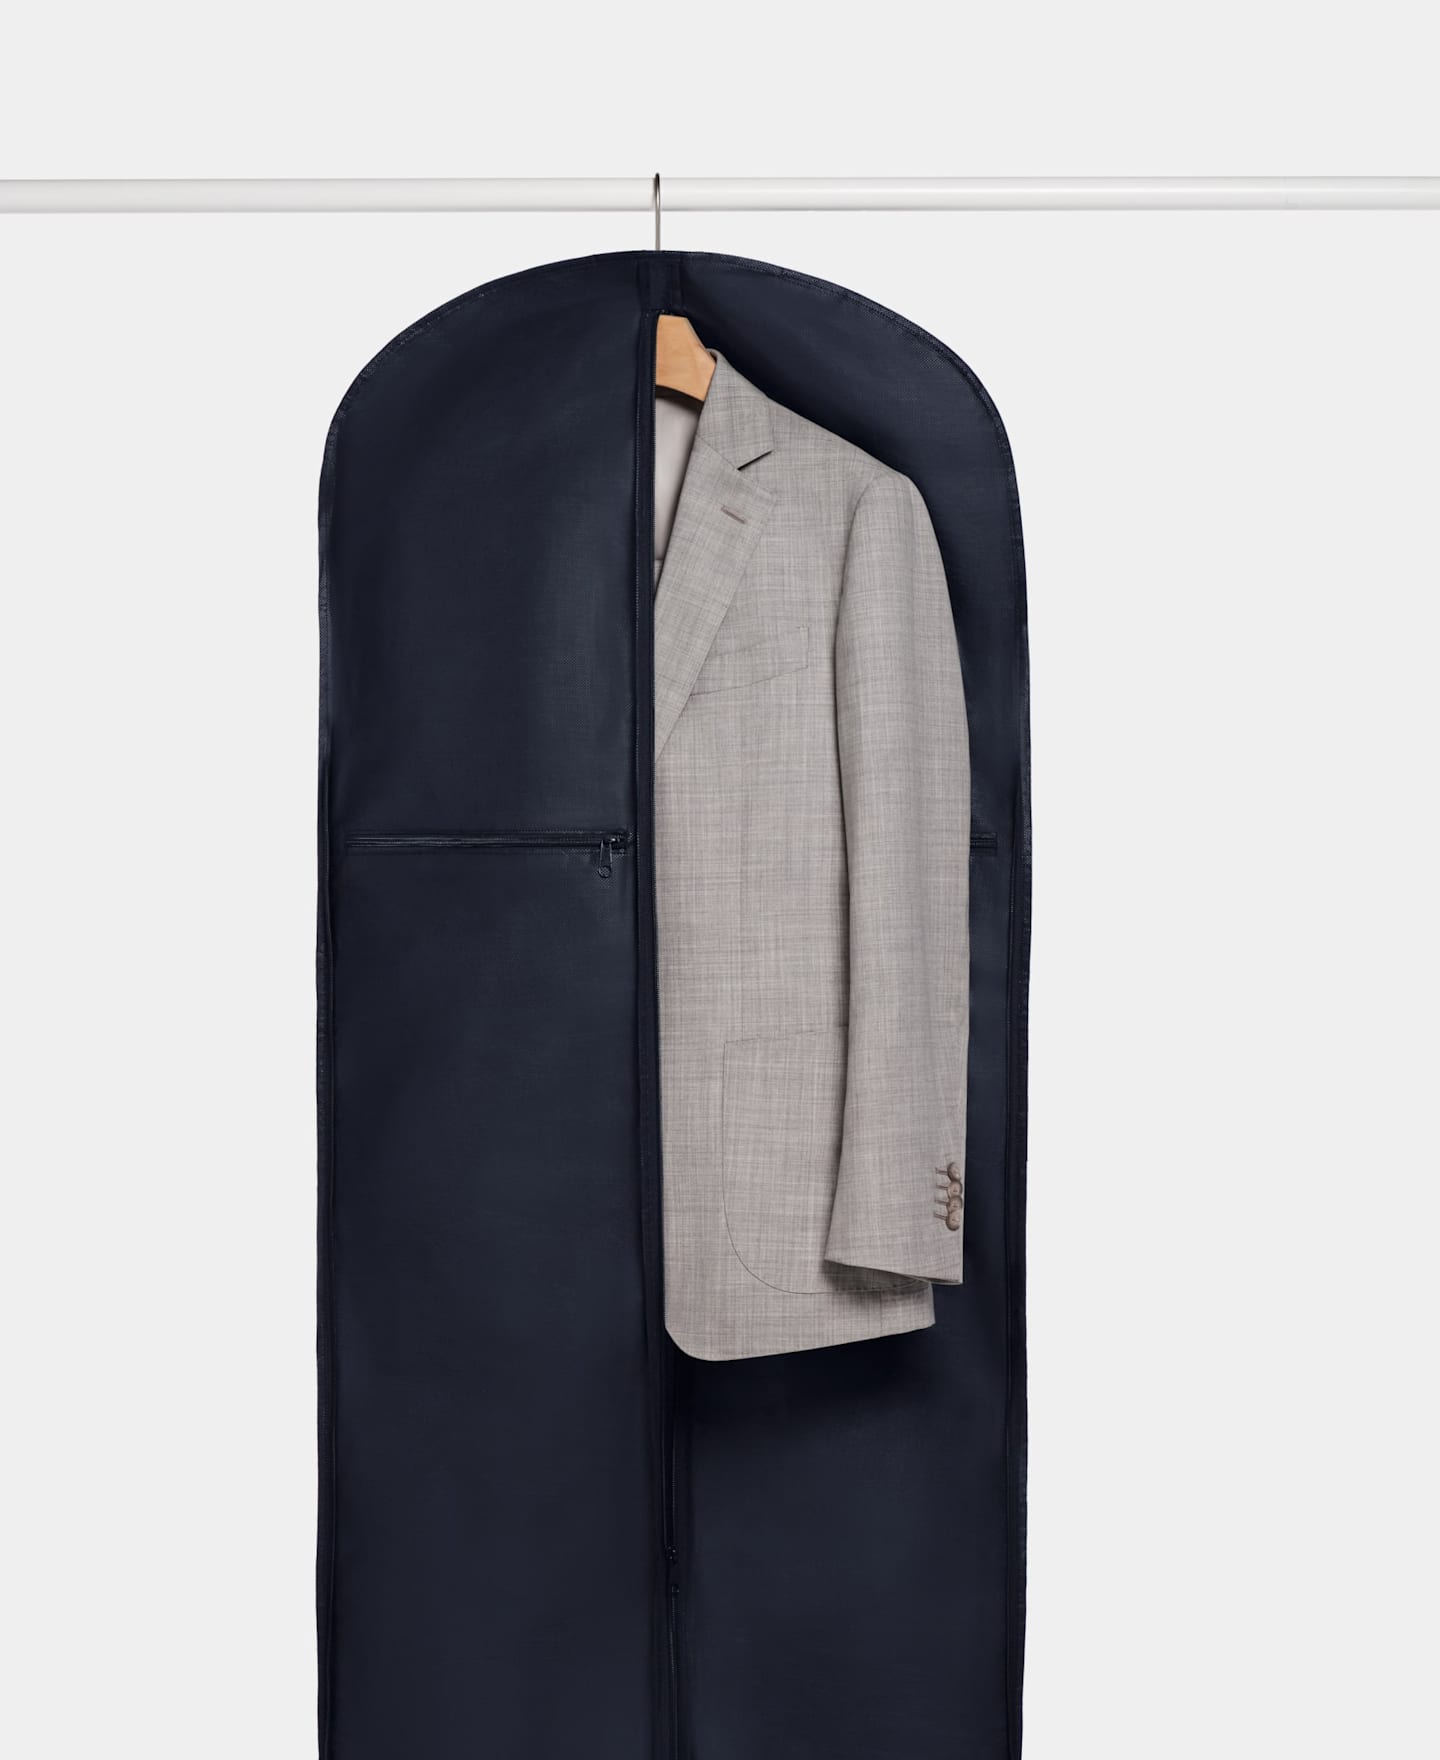 Light grey suit jacket packed in blue garment bag